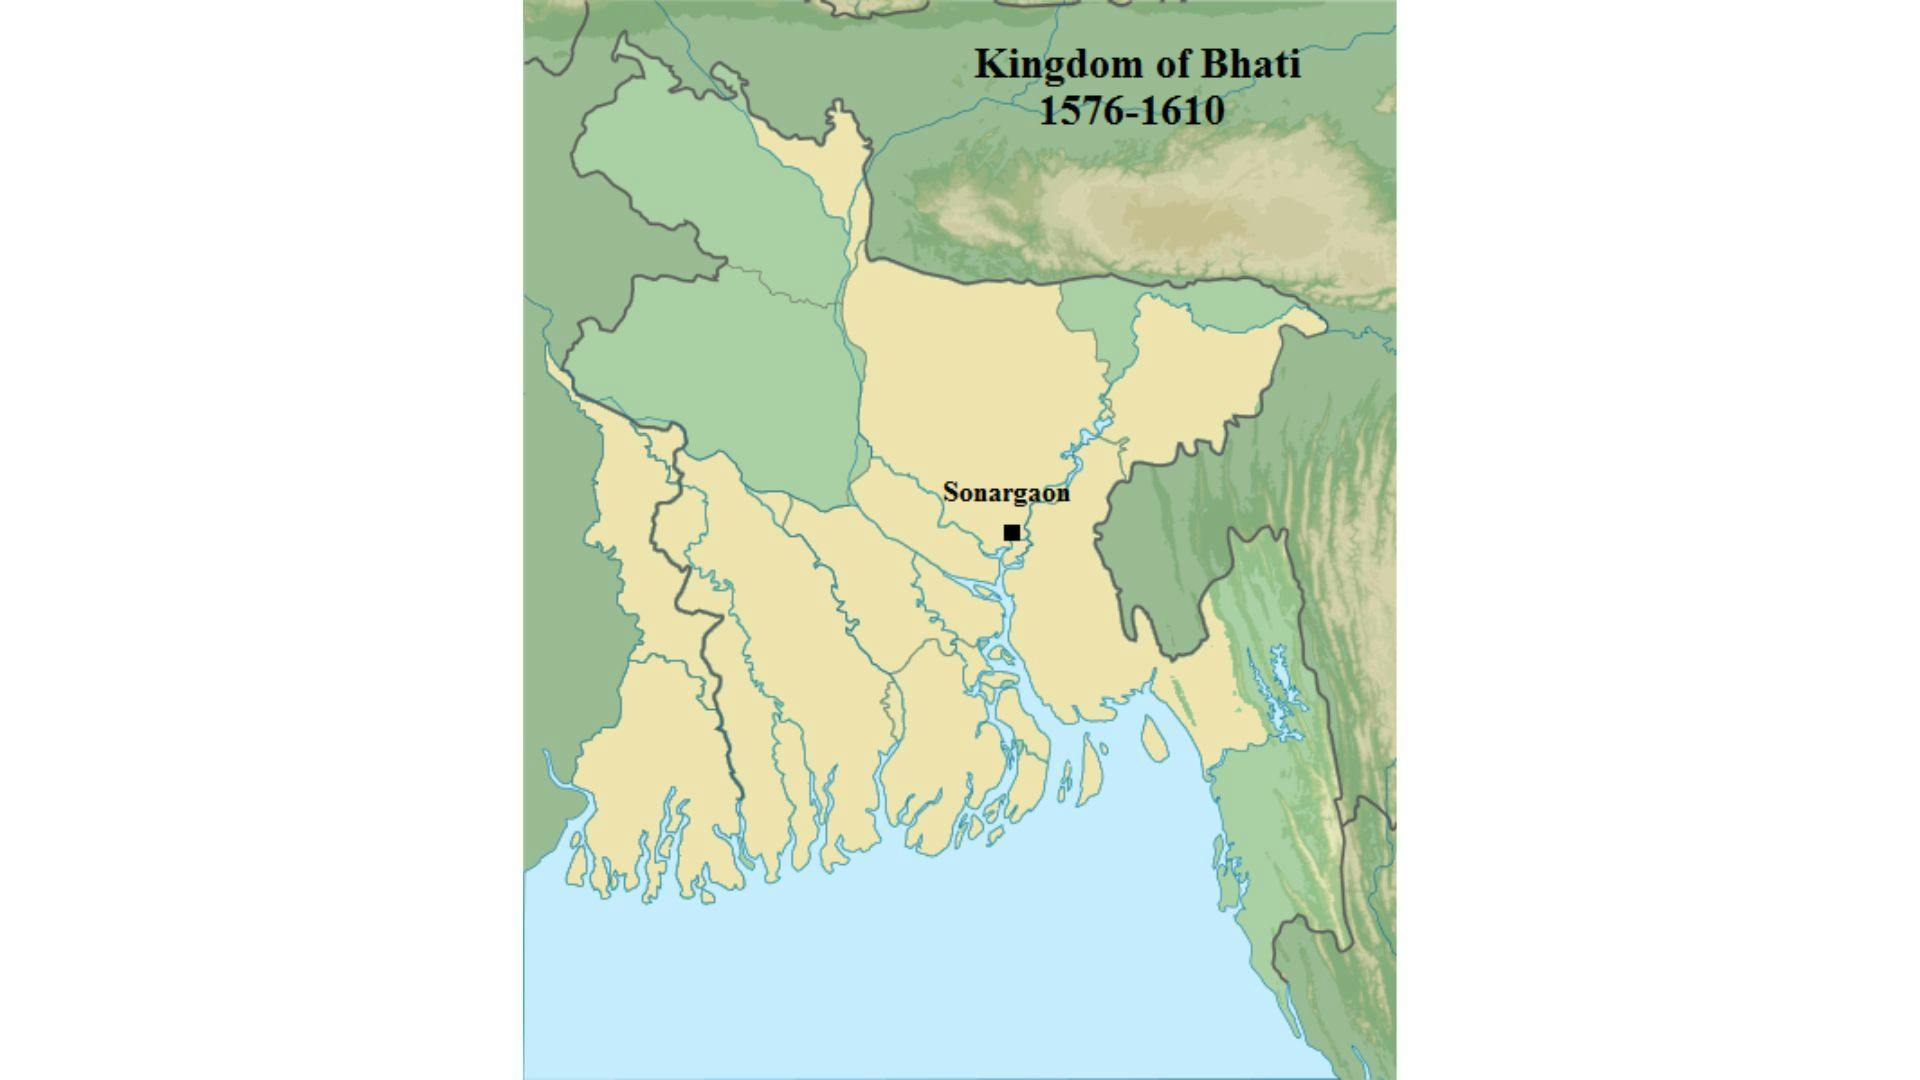 Territory ruled by the Baro Bhuiyan under Isa Khan, shown here as the Kingdom of Bhati | Wikimedia Commons